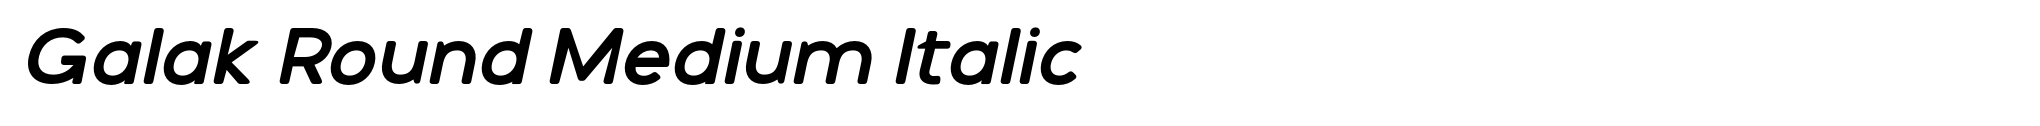 Galak Round Medium Italic image